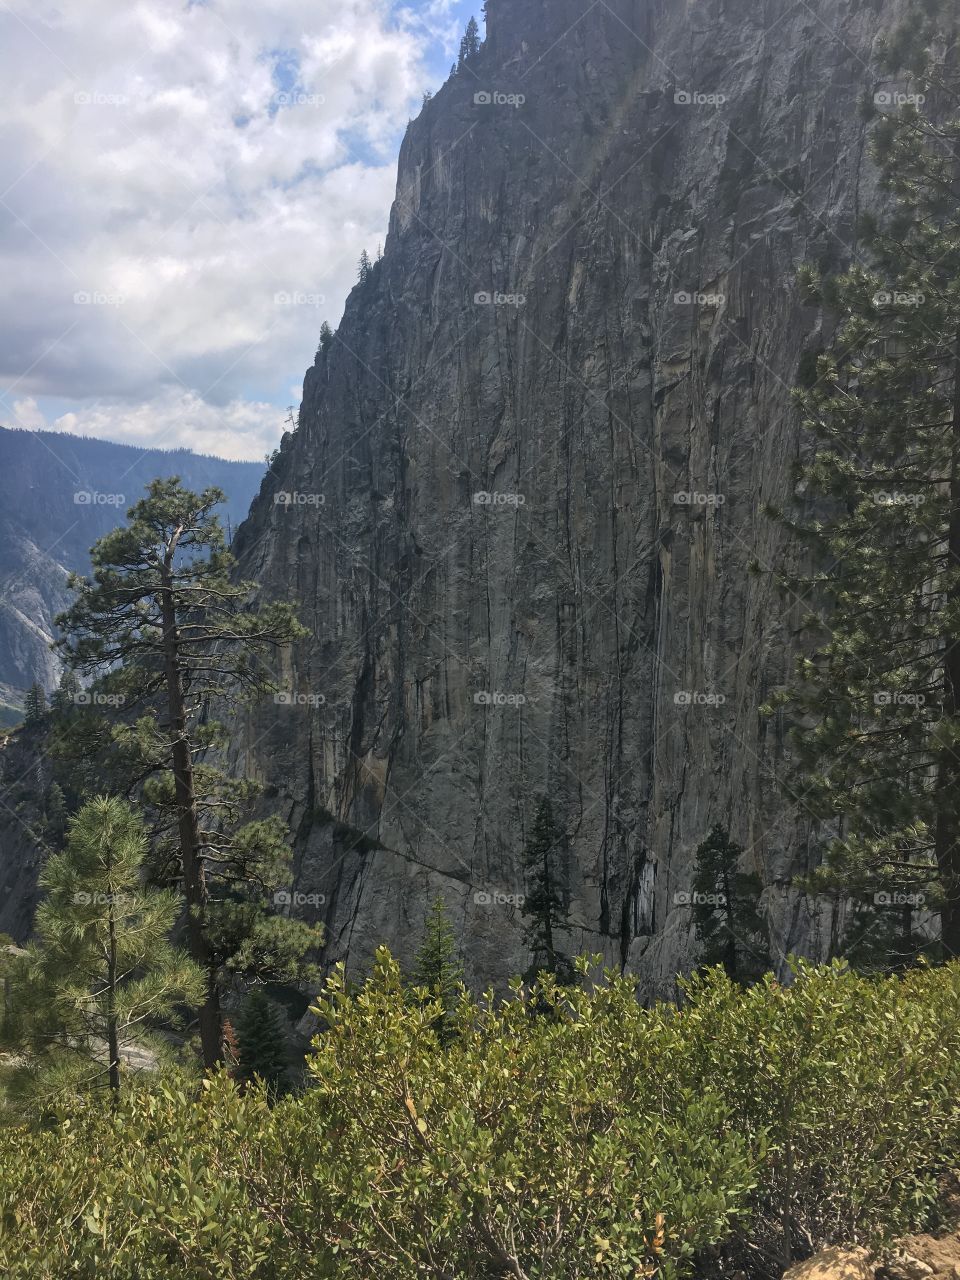 Yosemite Valley 